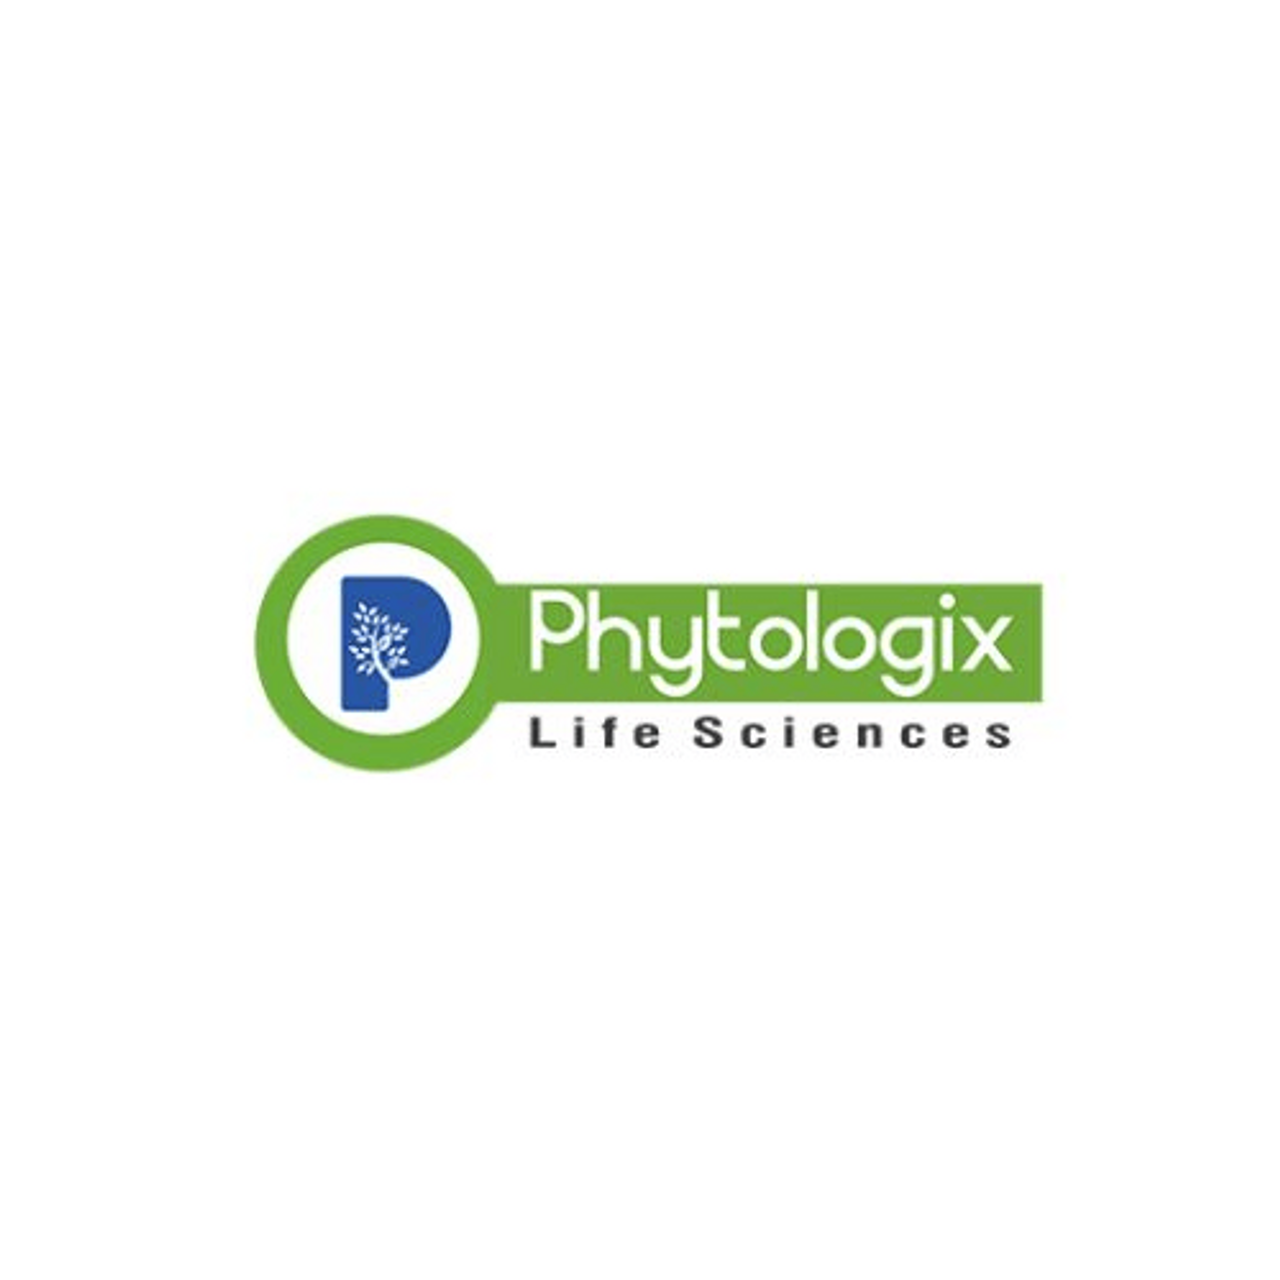 phytologix